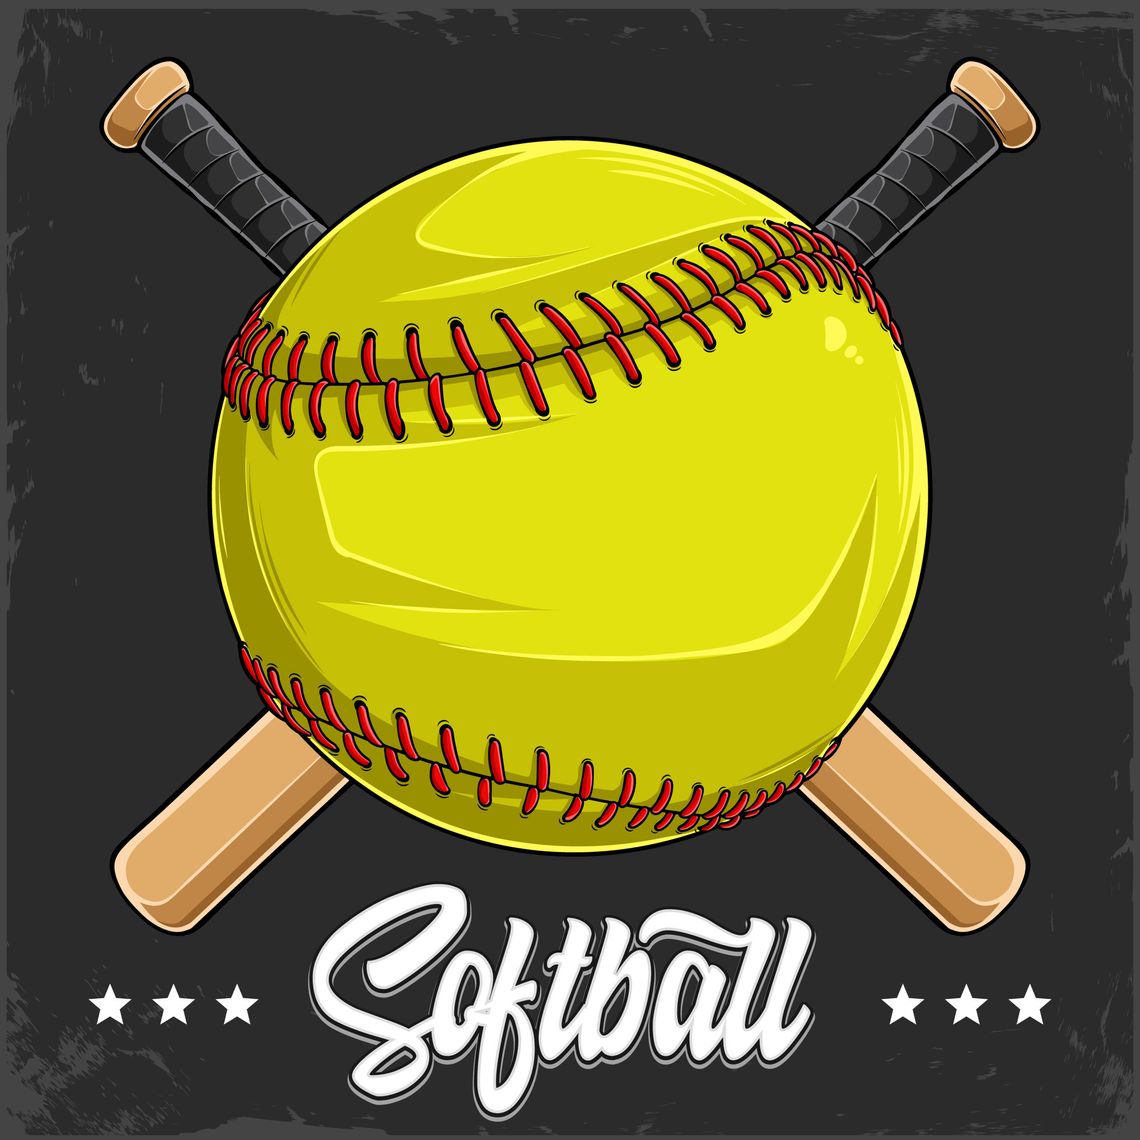 NB Canyon splits season series with Champion softball